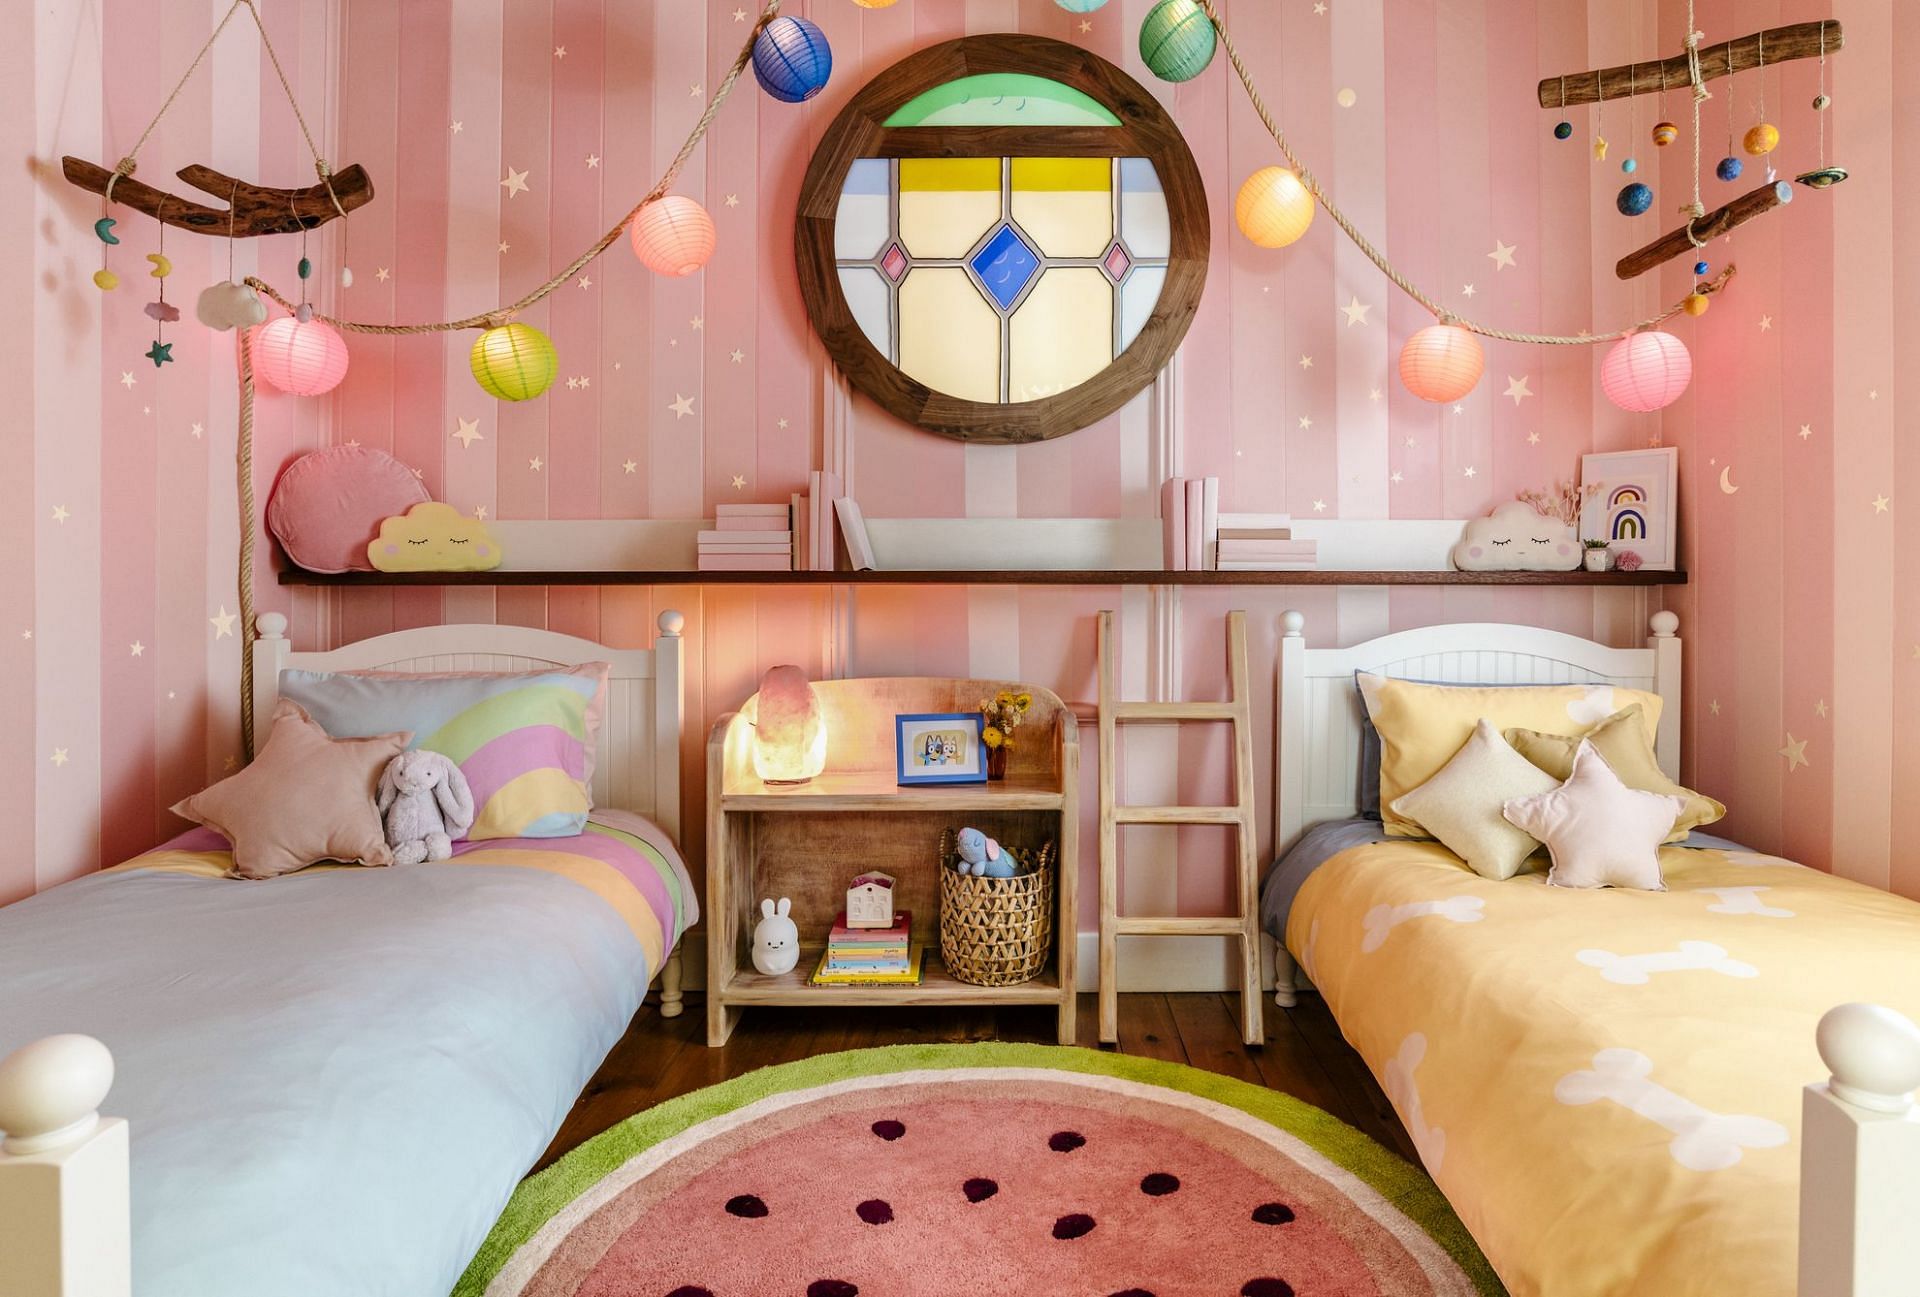 The Heeler X Airbnb house&#039;s children&#039;s bedroom (Image via Airbnb)